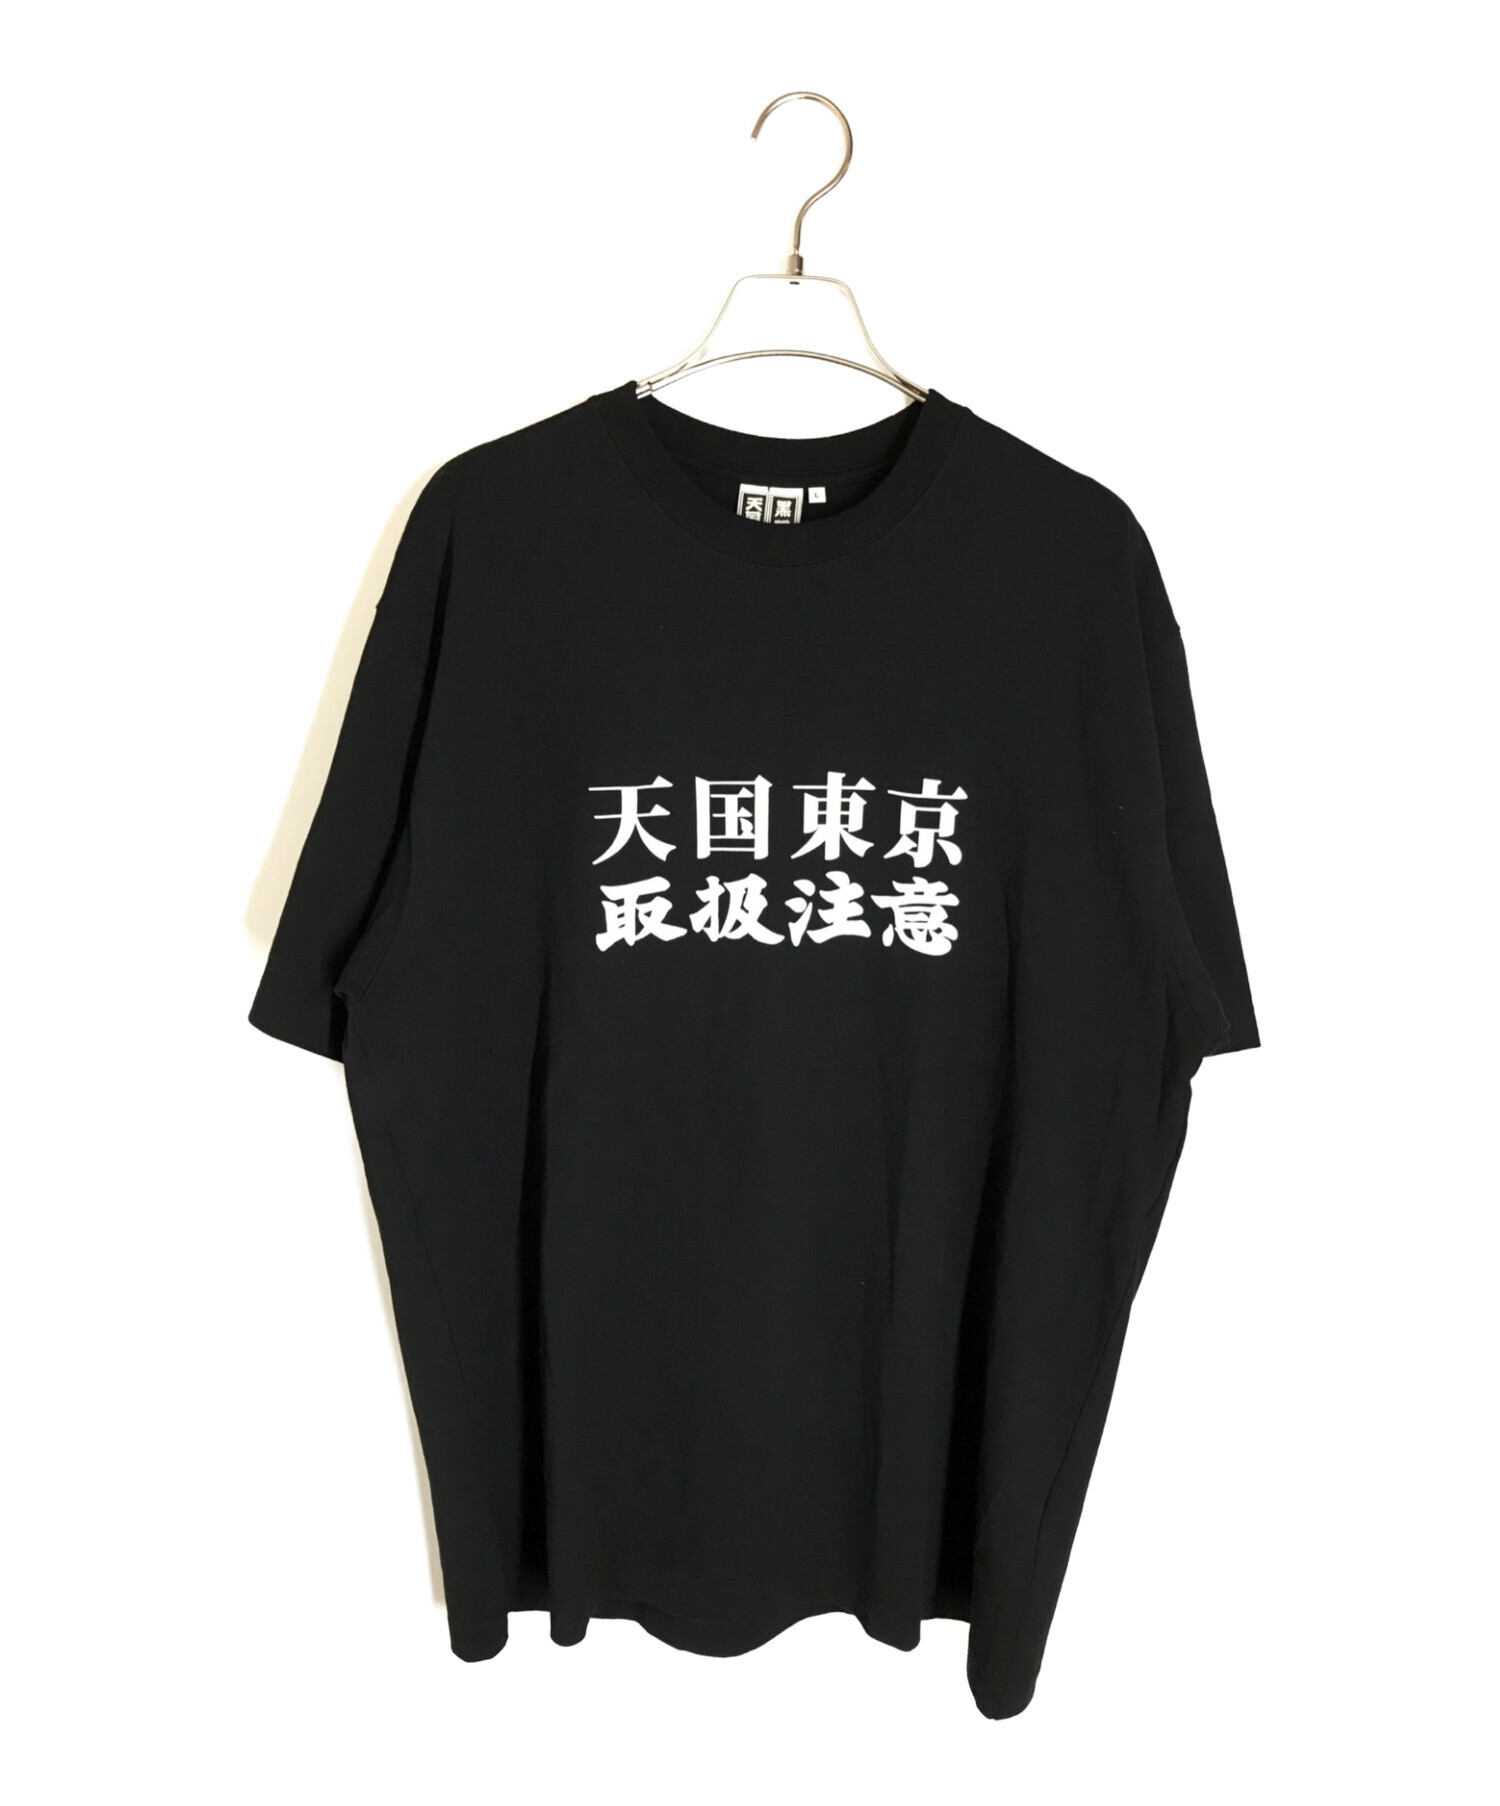 BlackEyePatch×WACKO MARIA (ブラックアイパッチ×ワコマリア) コラボプリントTシャツ ブラック×ホワイト サイズ:L